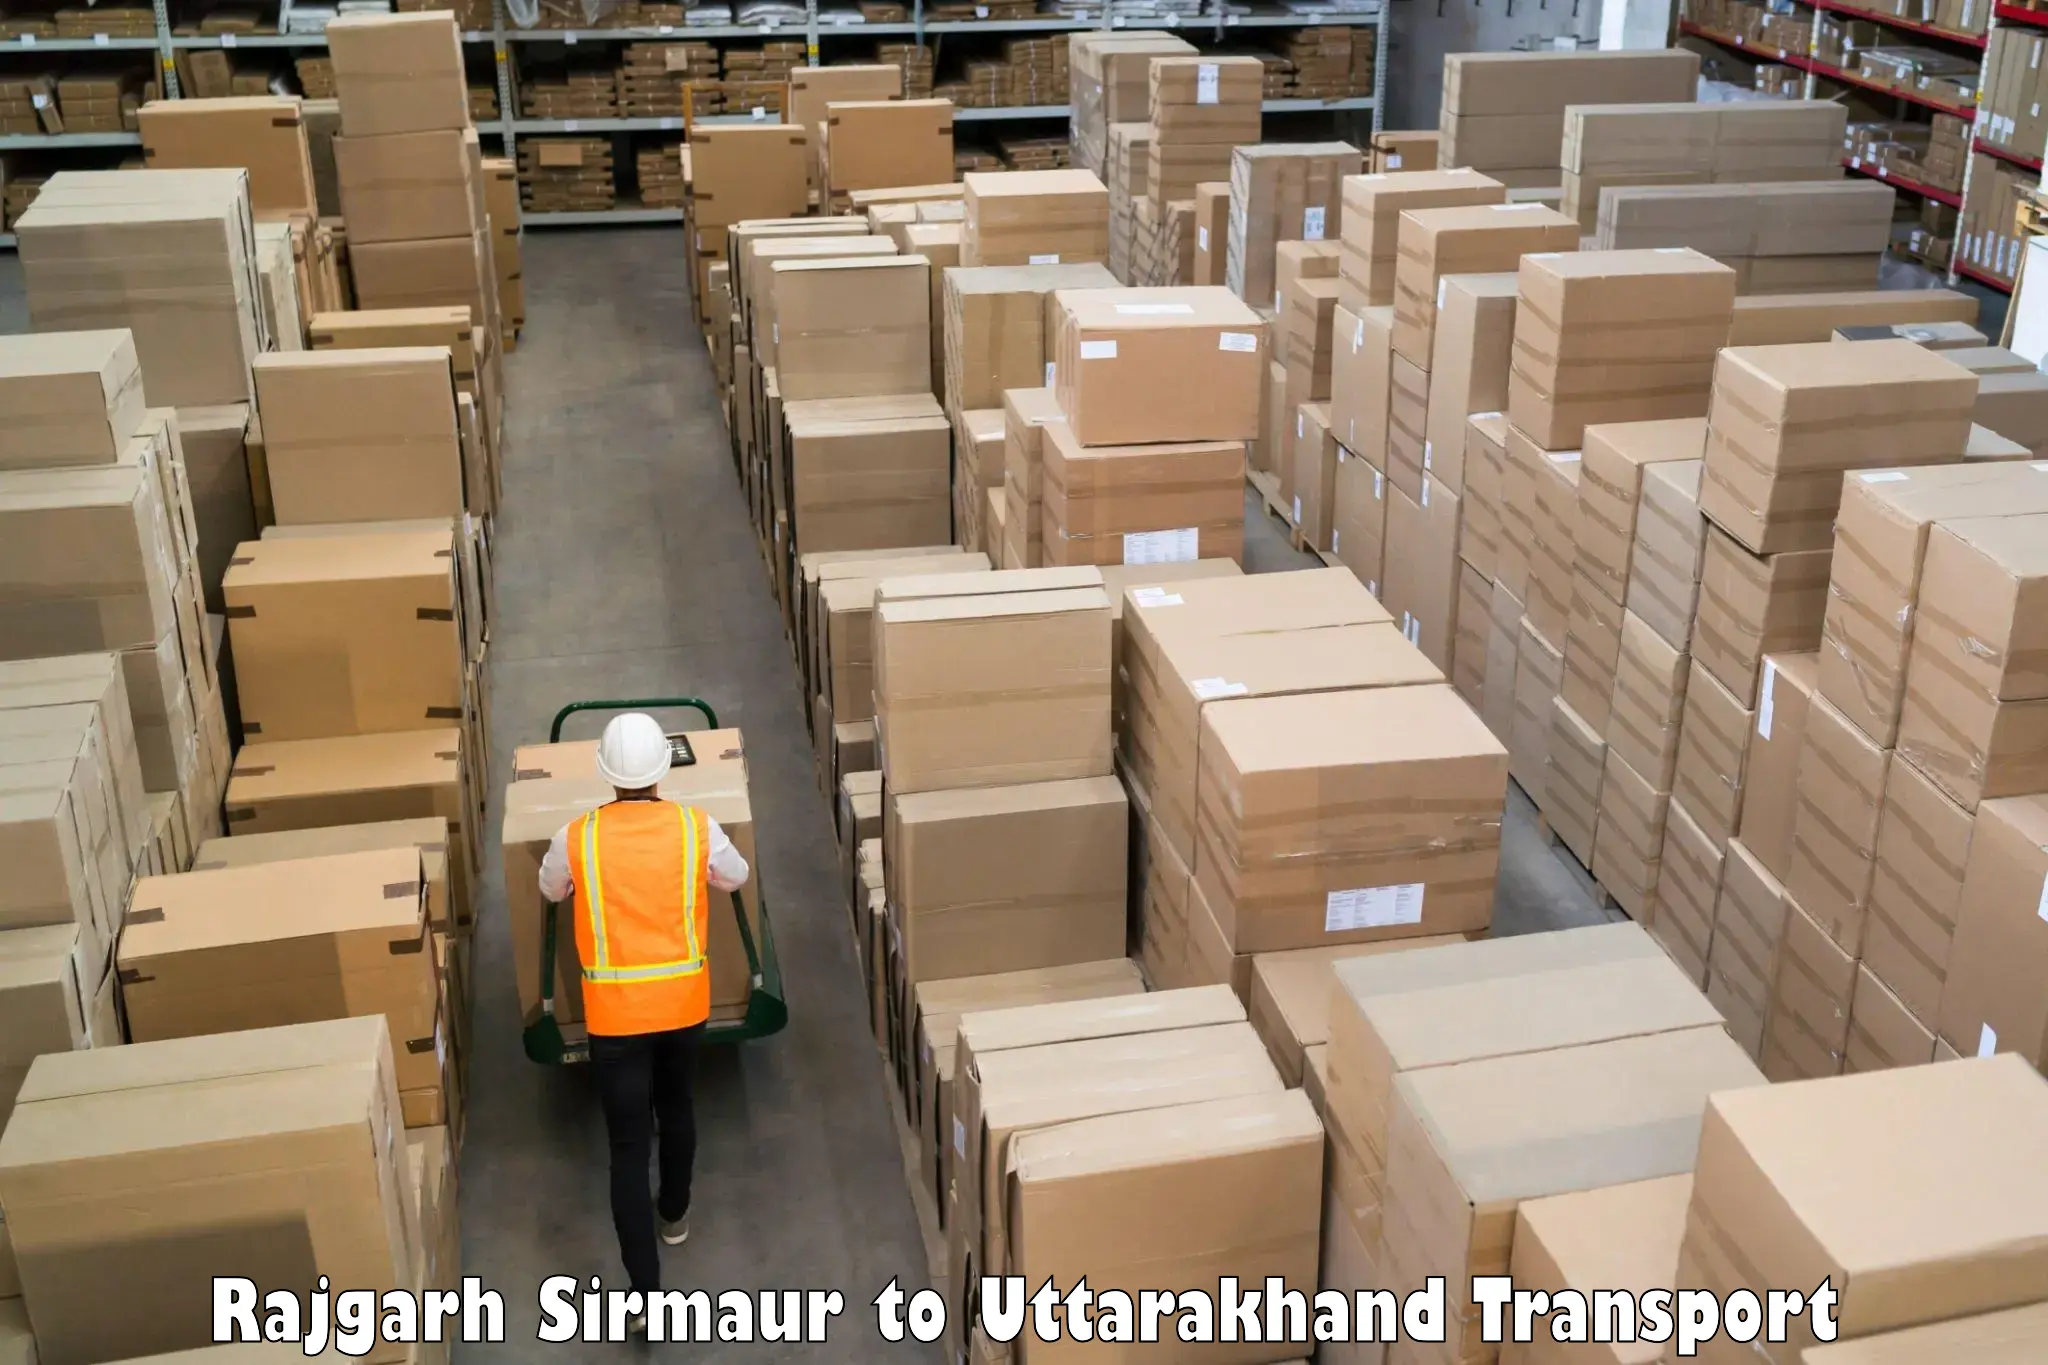 Truck transport companies in India Rajgarh Sirmaur to Rudrapur